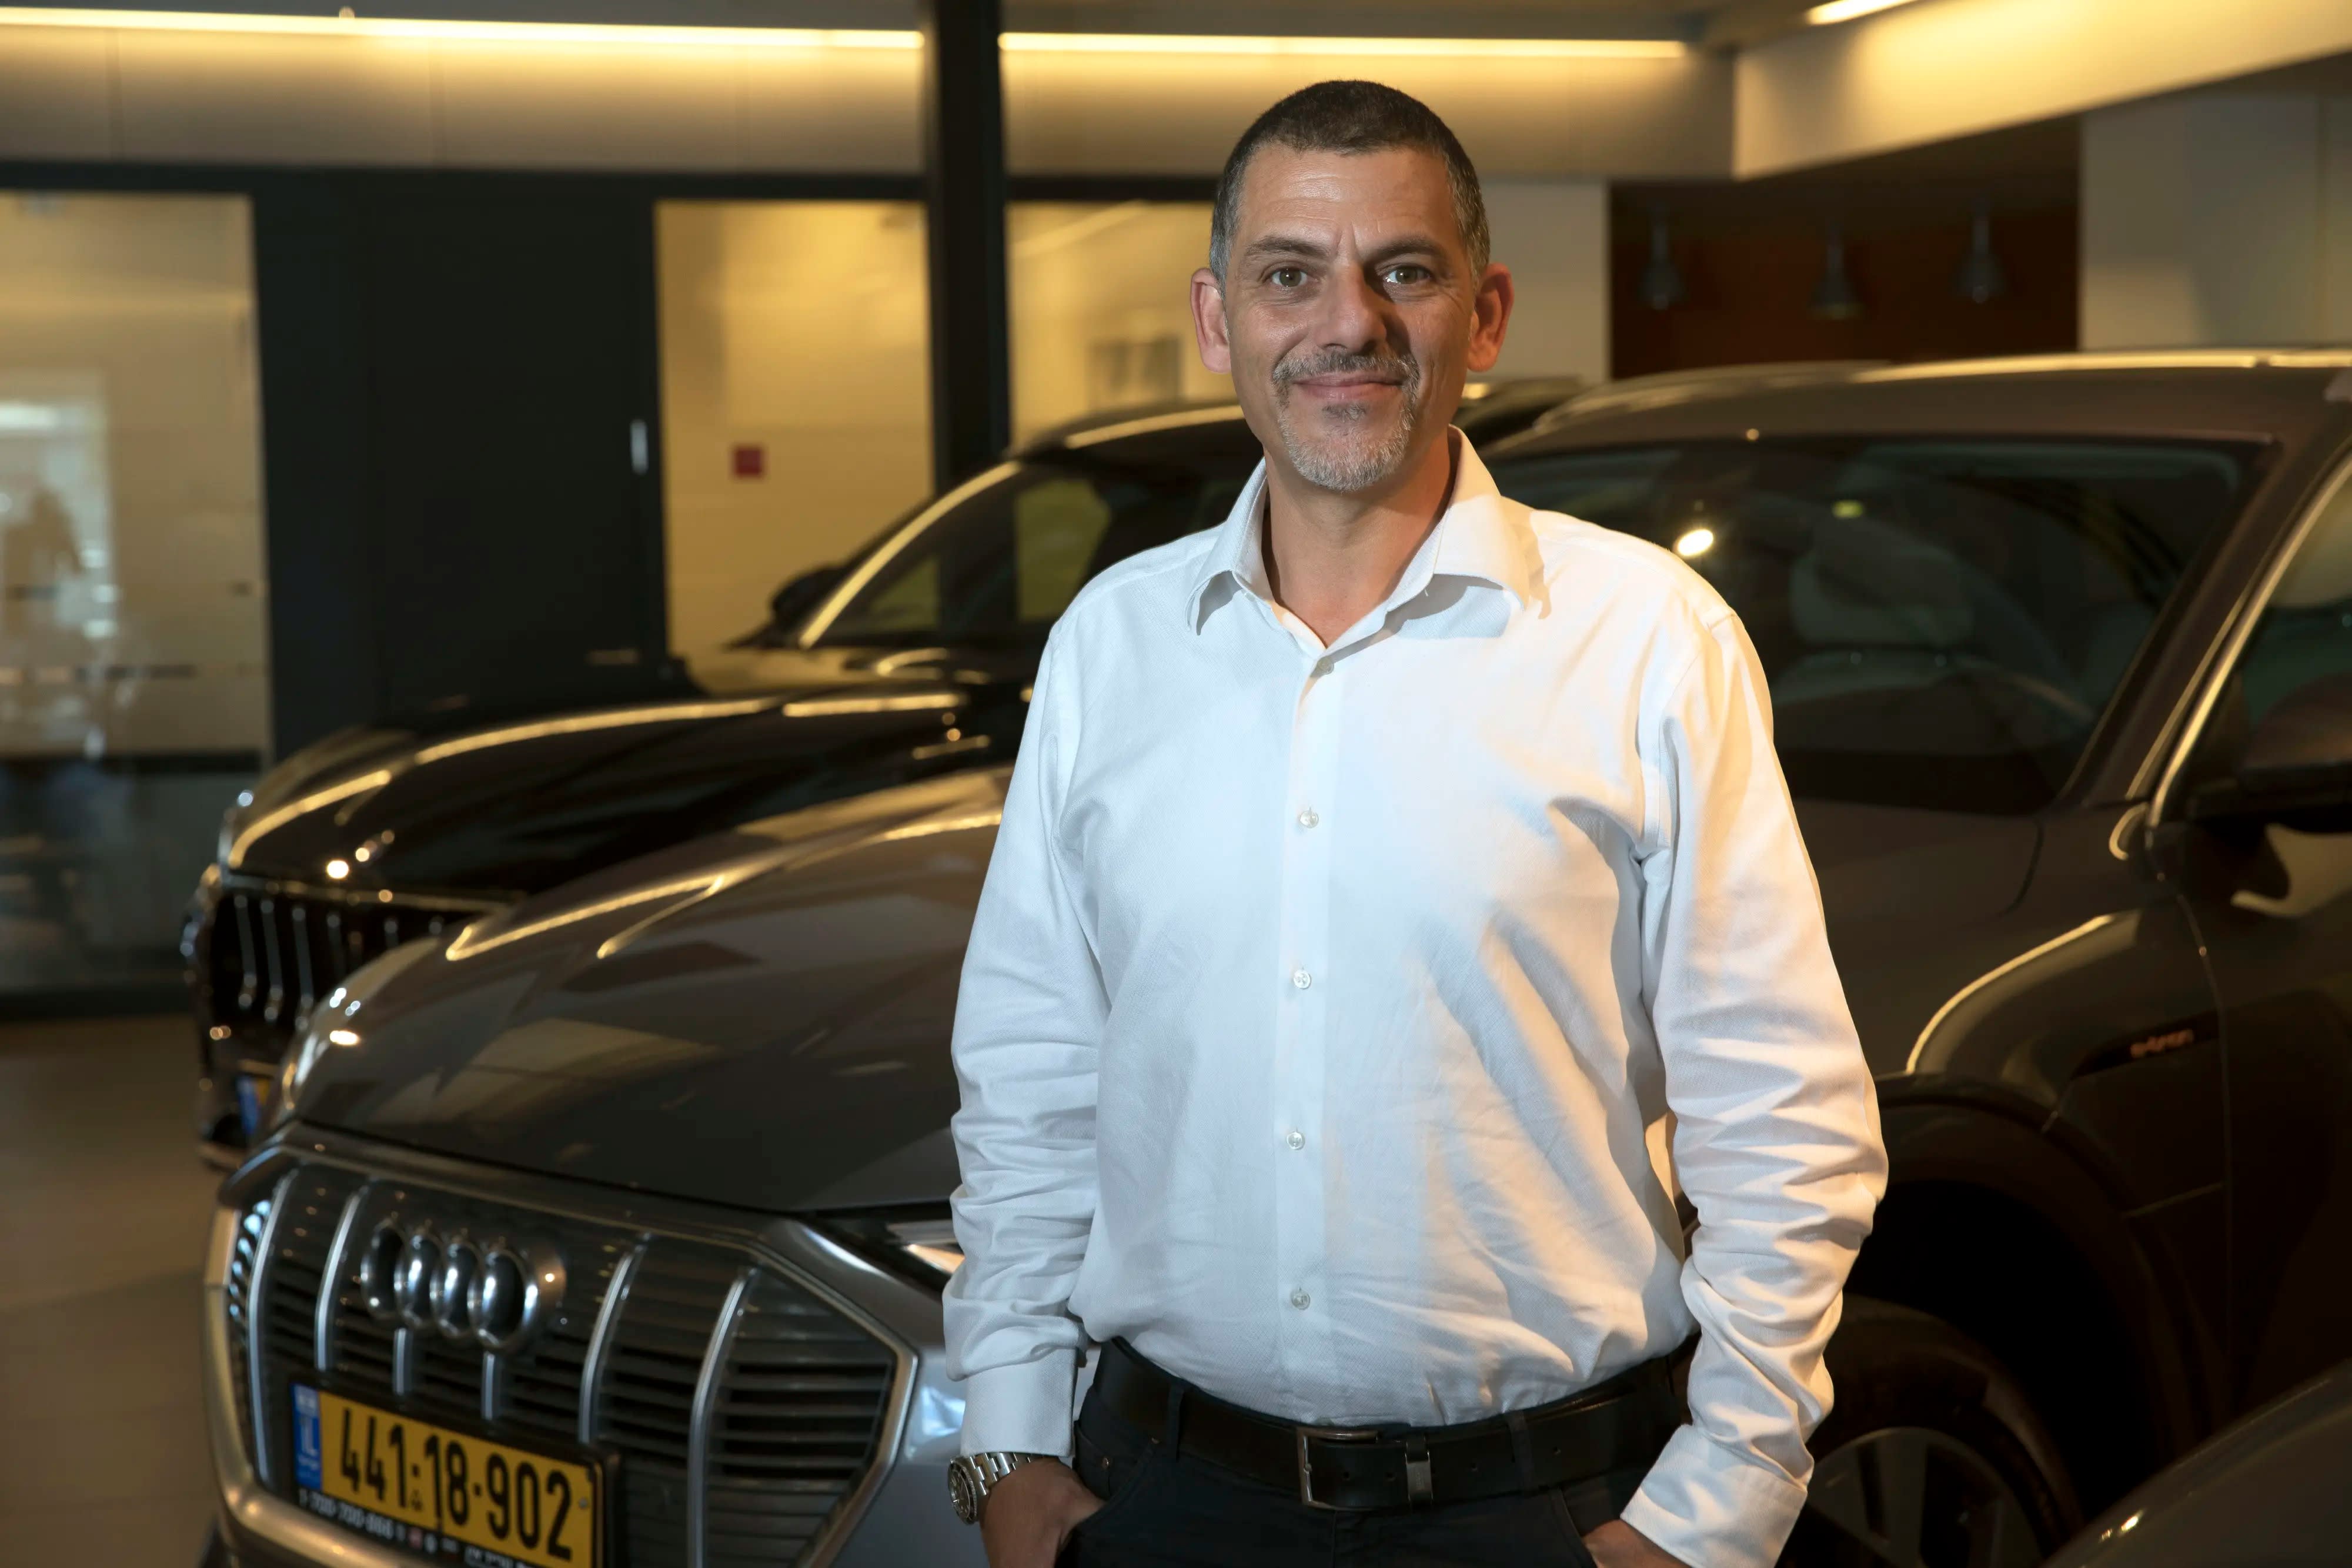  Guy Barbon, CEO of Autodeal (credit: RONEN TOPELBERG)